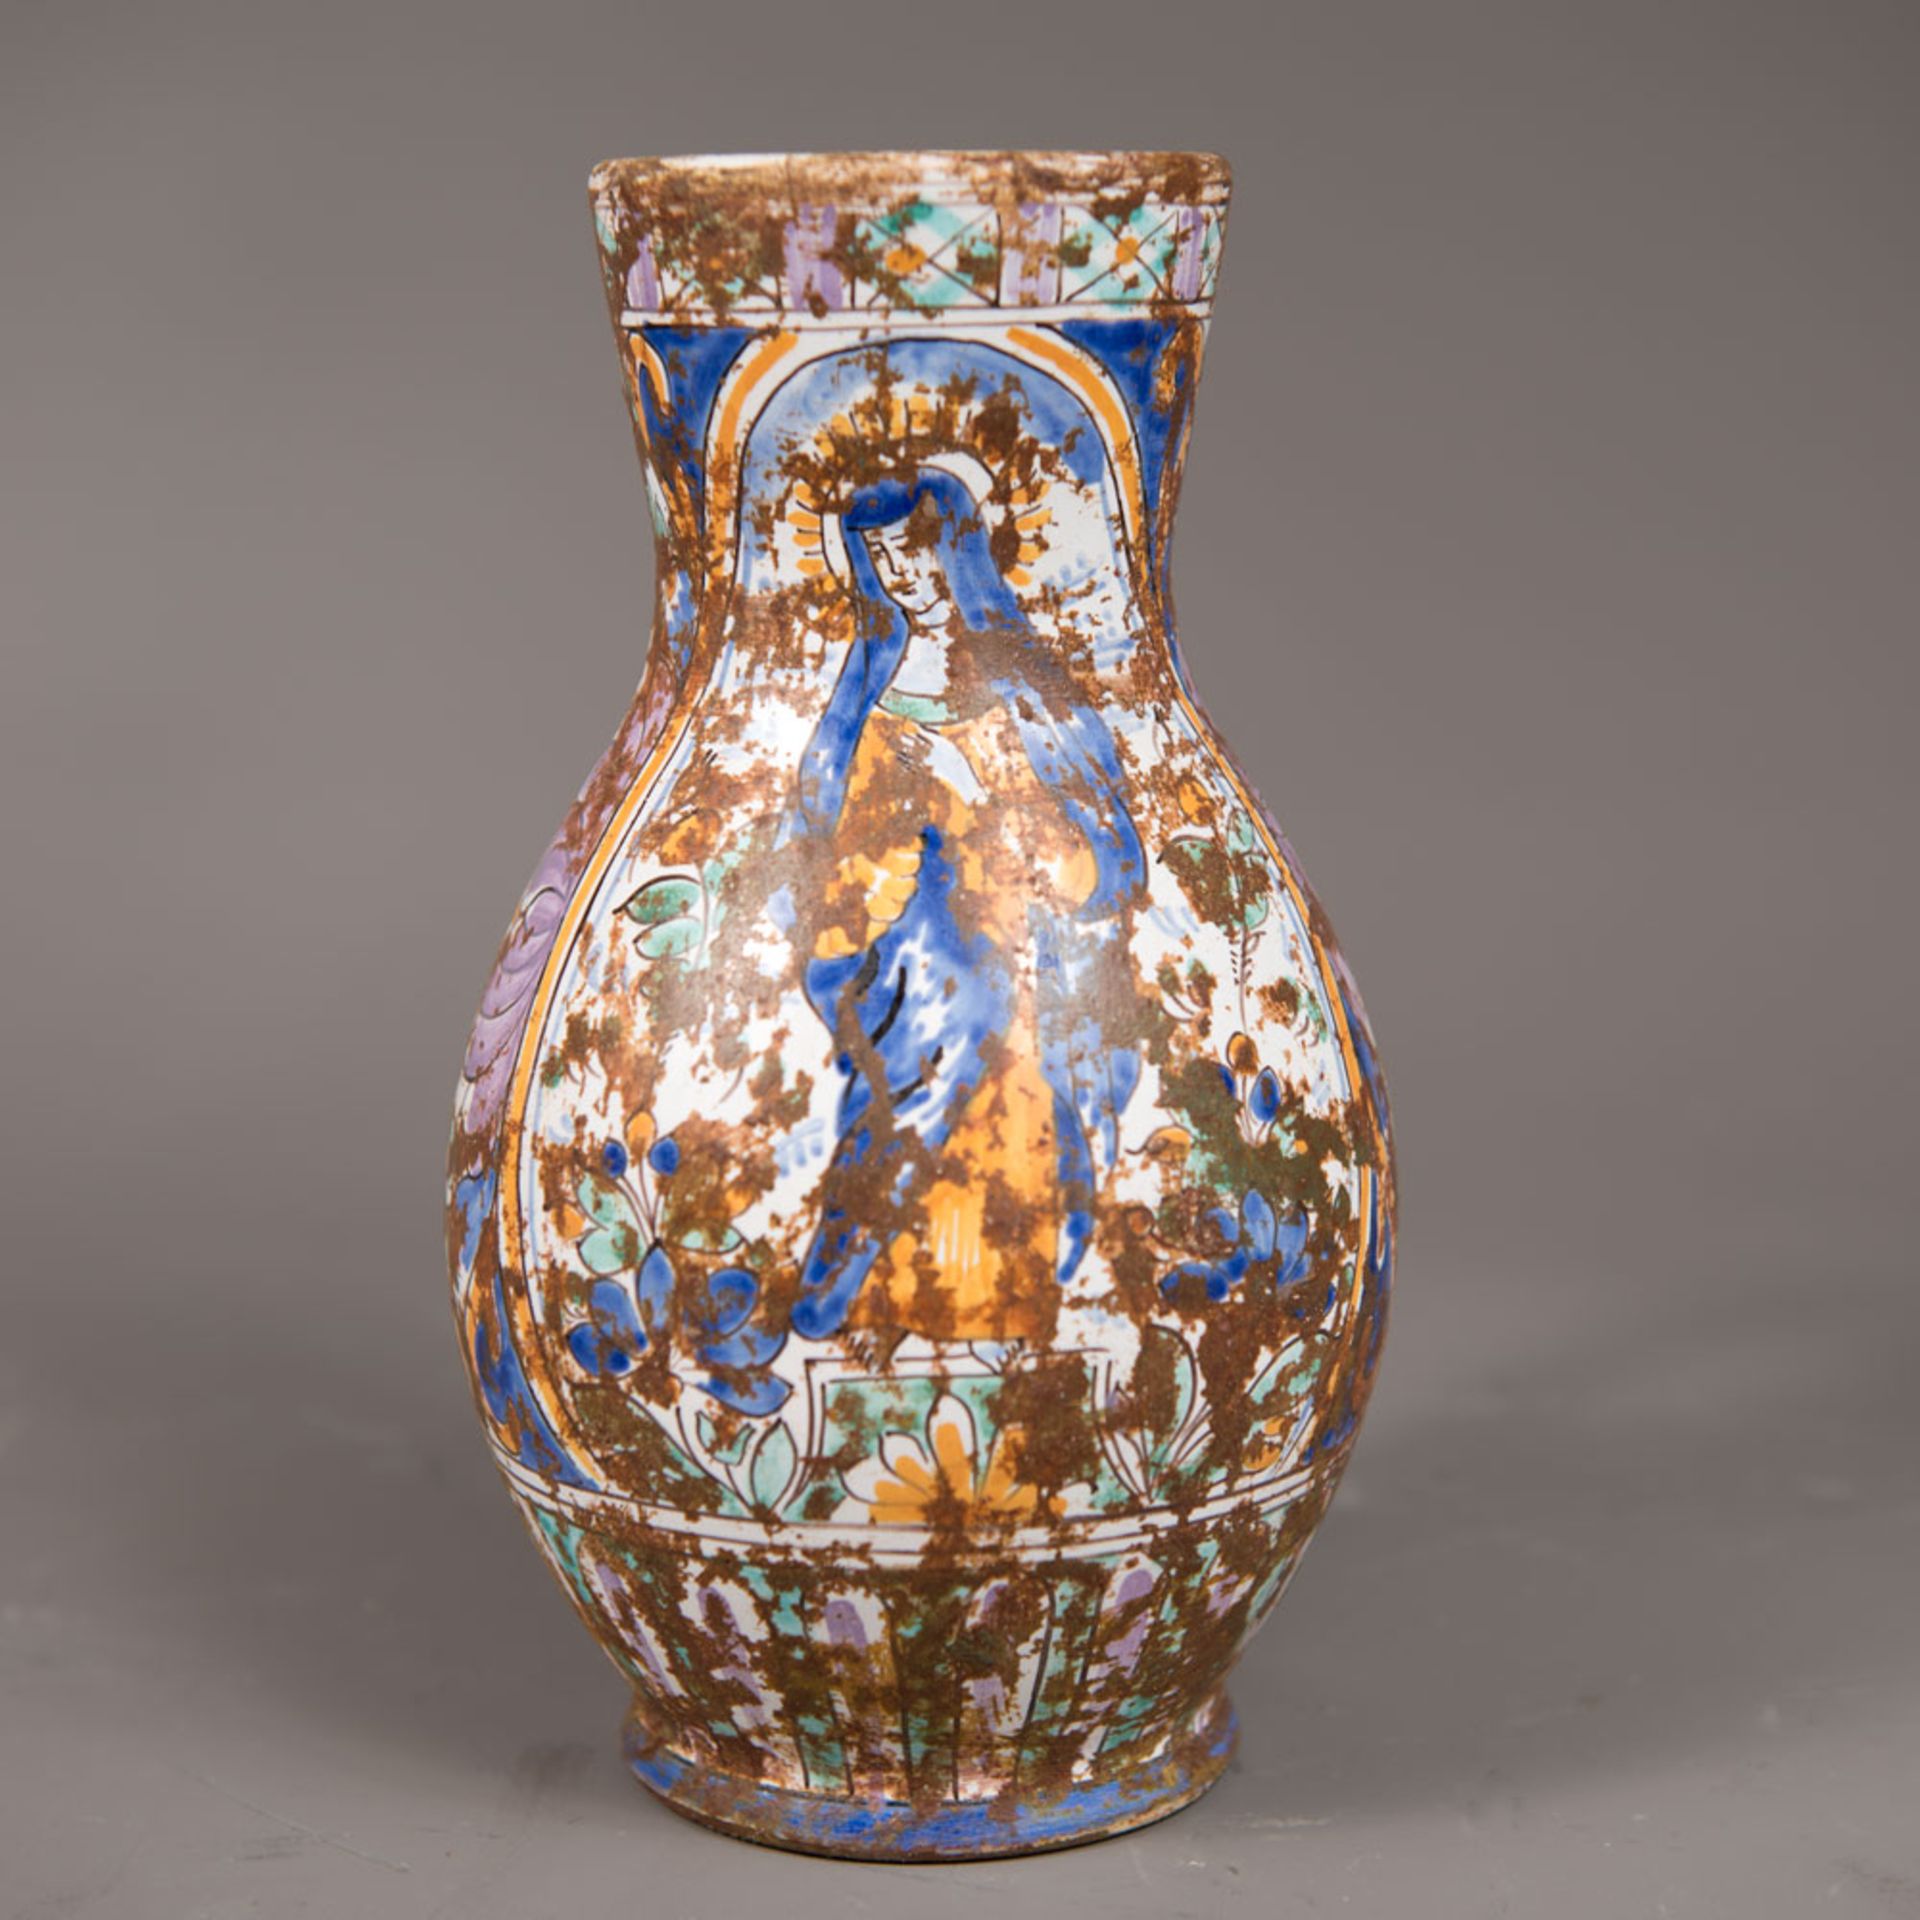 Lot of three ceramic jugs - Image 3 of 3